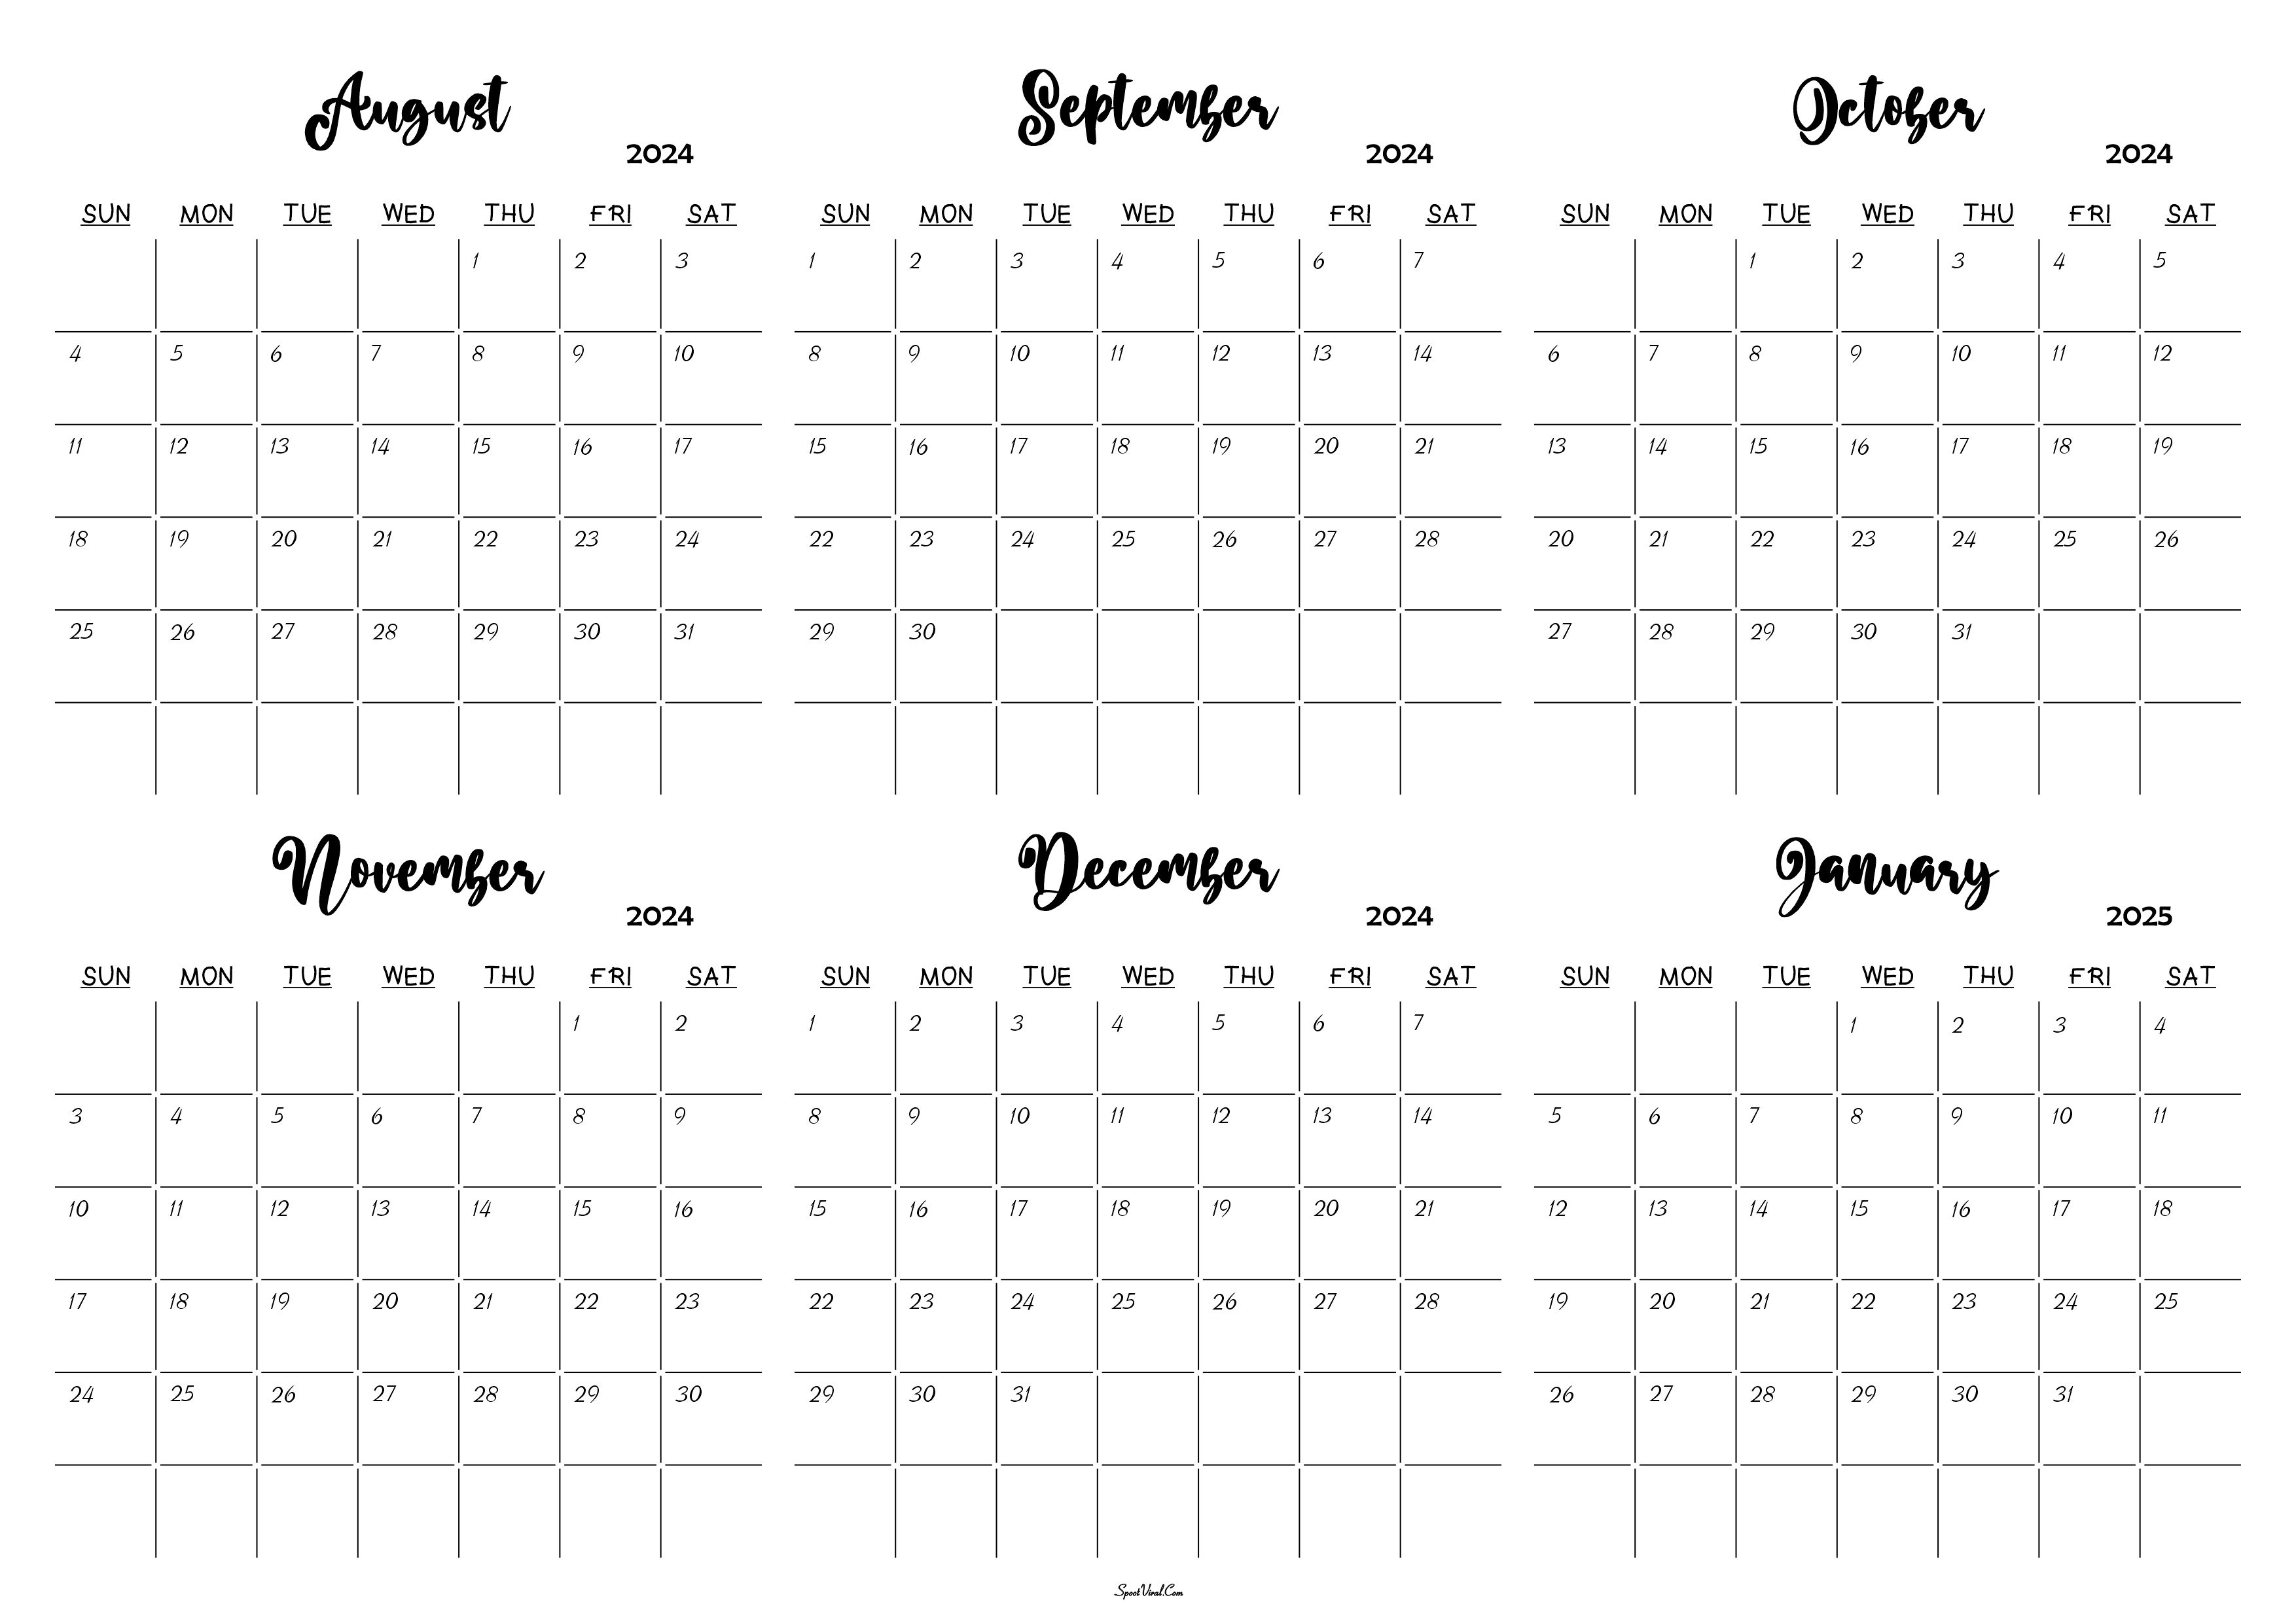 August 2024 to January 2025 Calendar